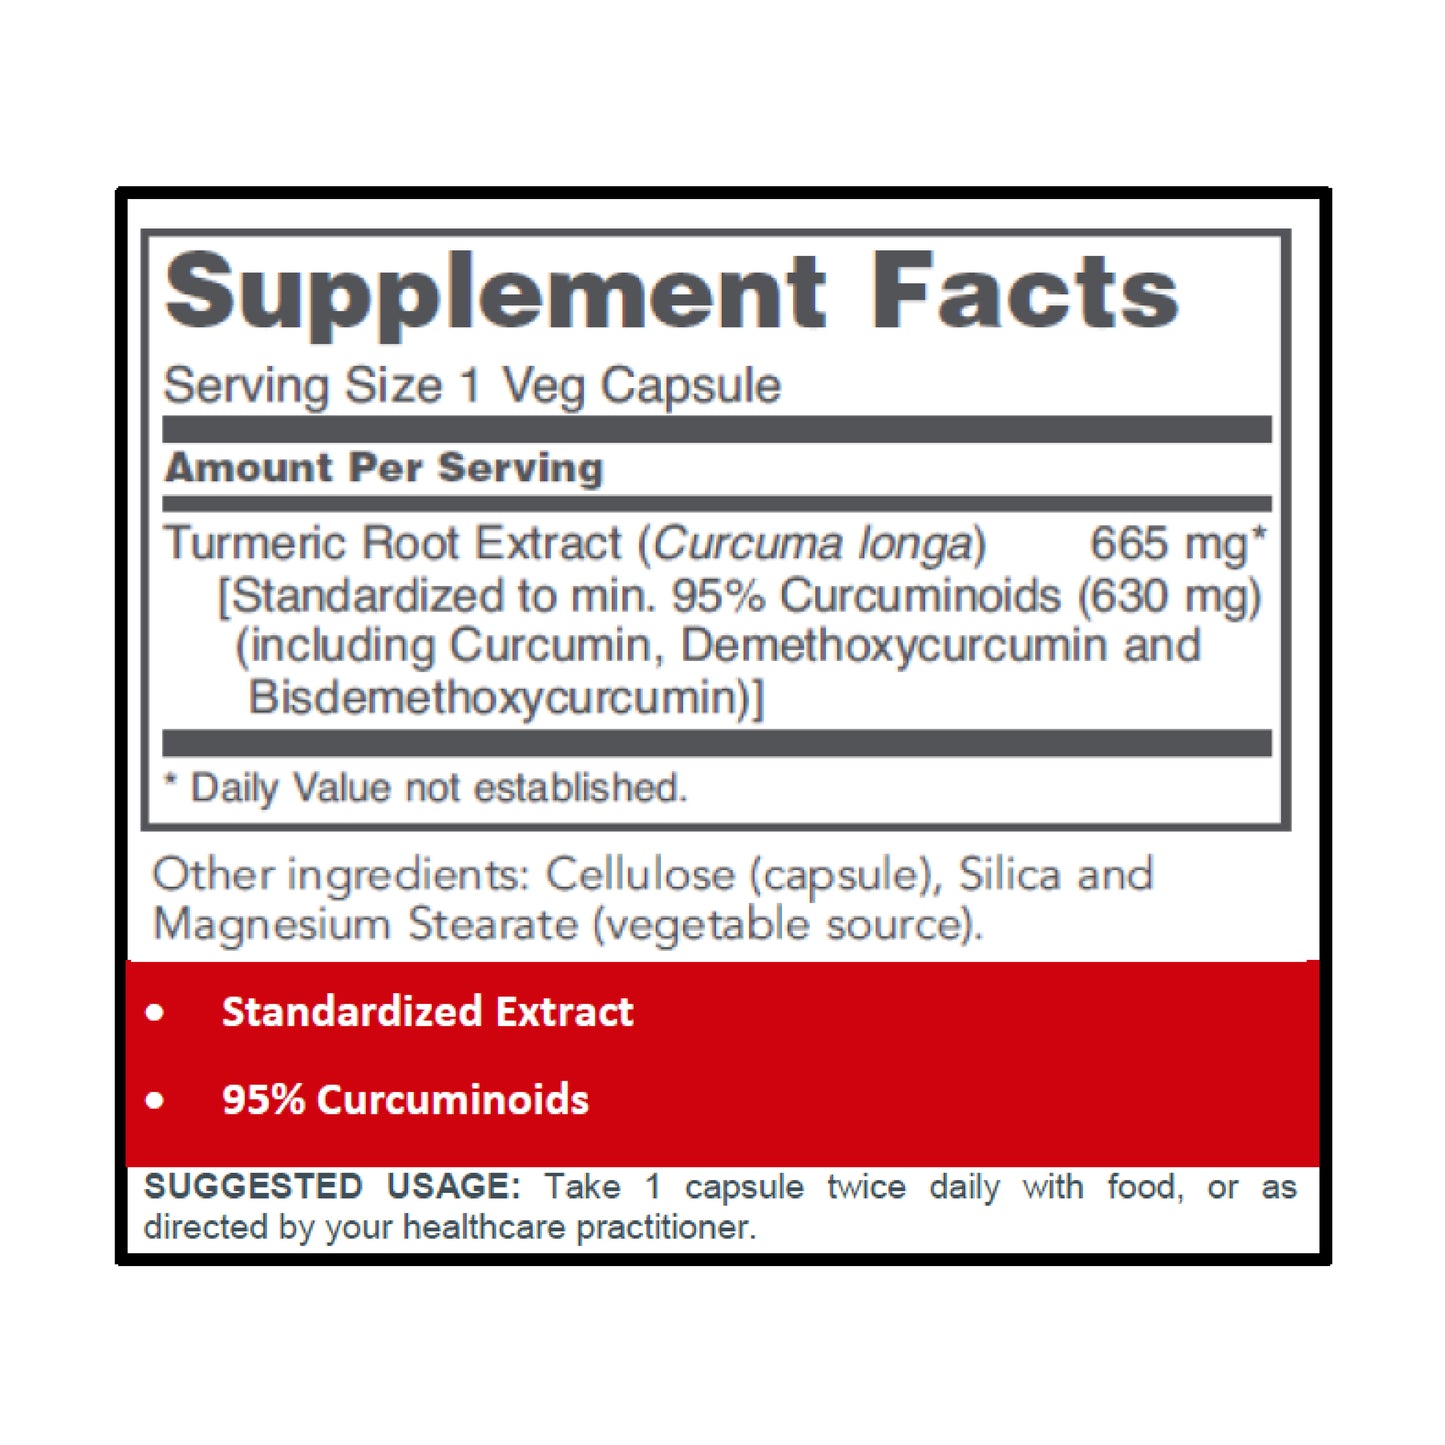 Protocol for Life Balance, Curcumin, Turmeric Root Extract, 665 mg, 60 Veg Capsules